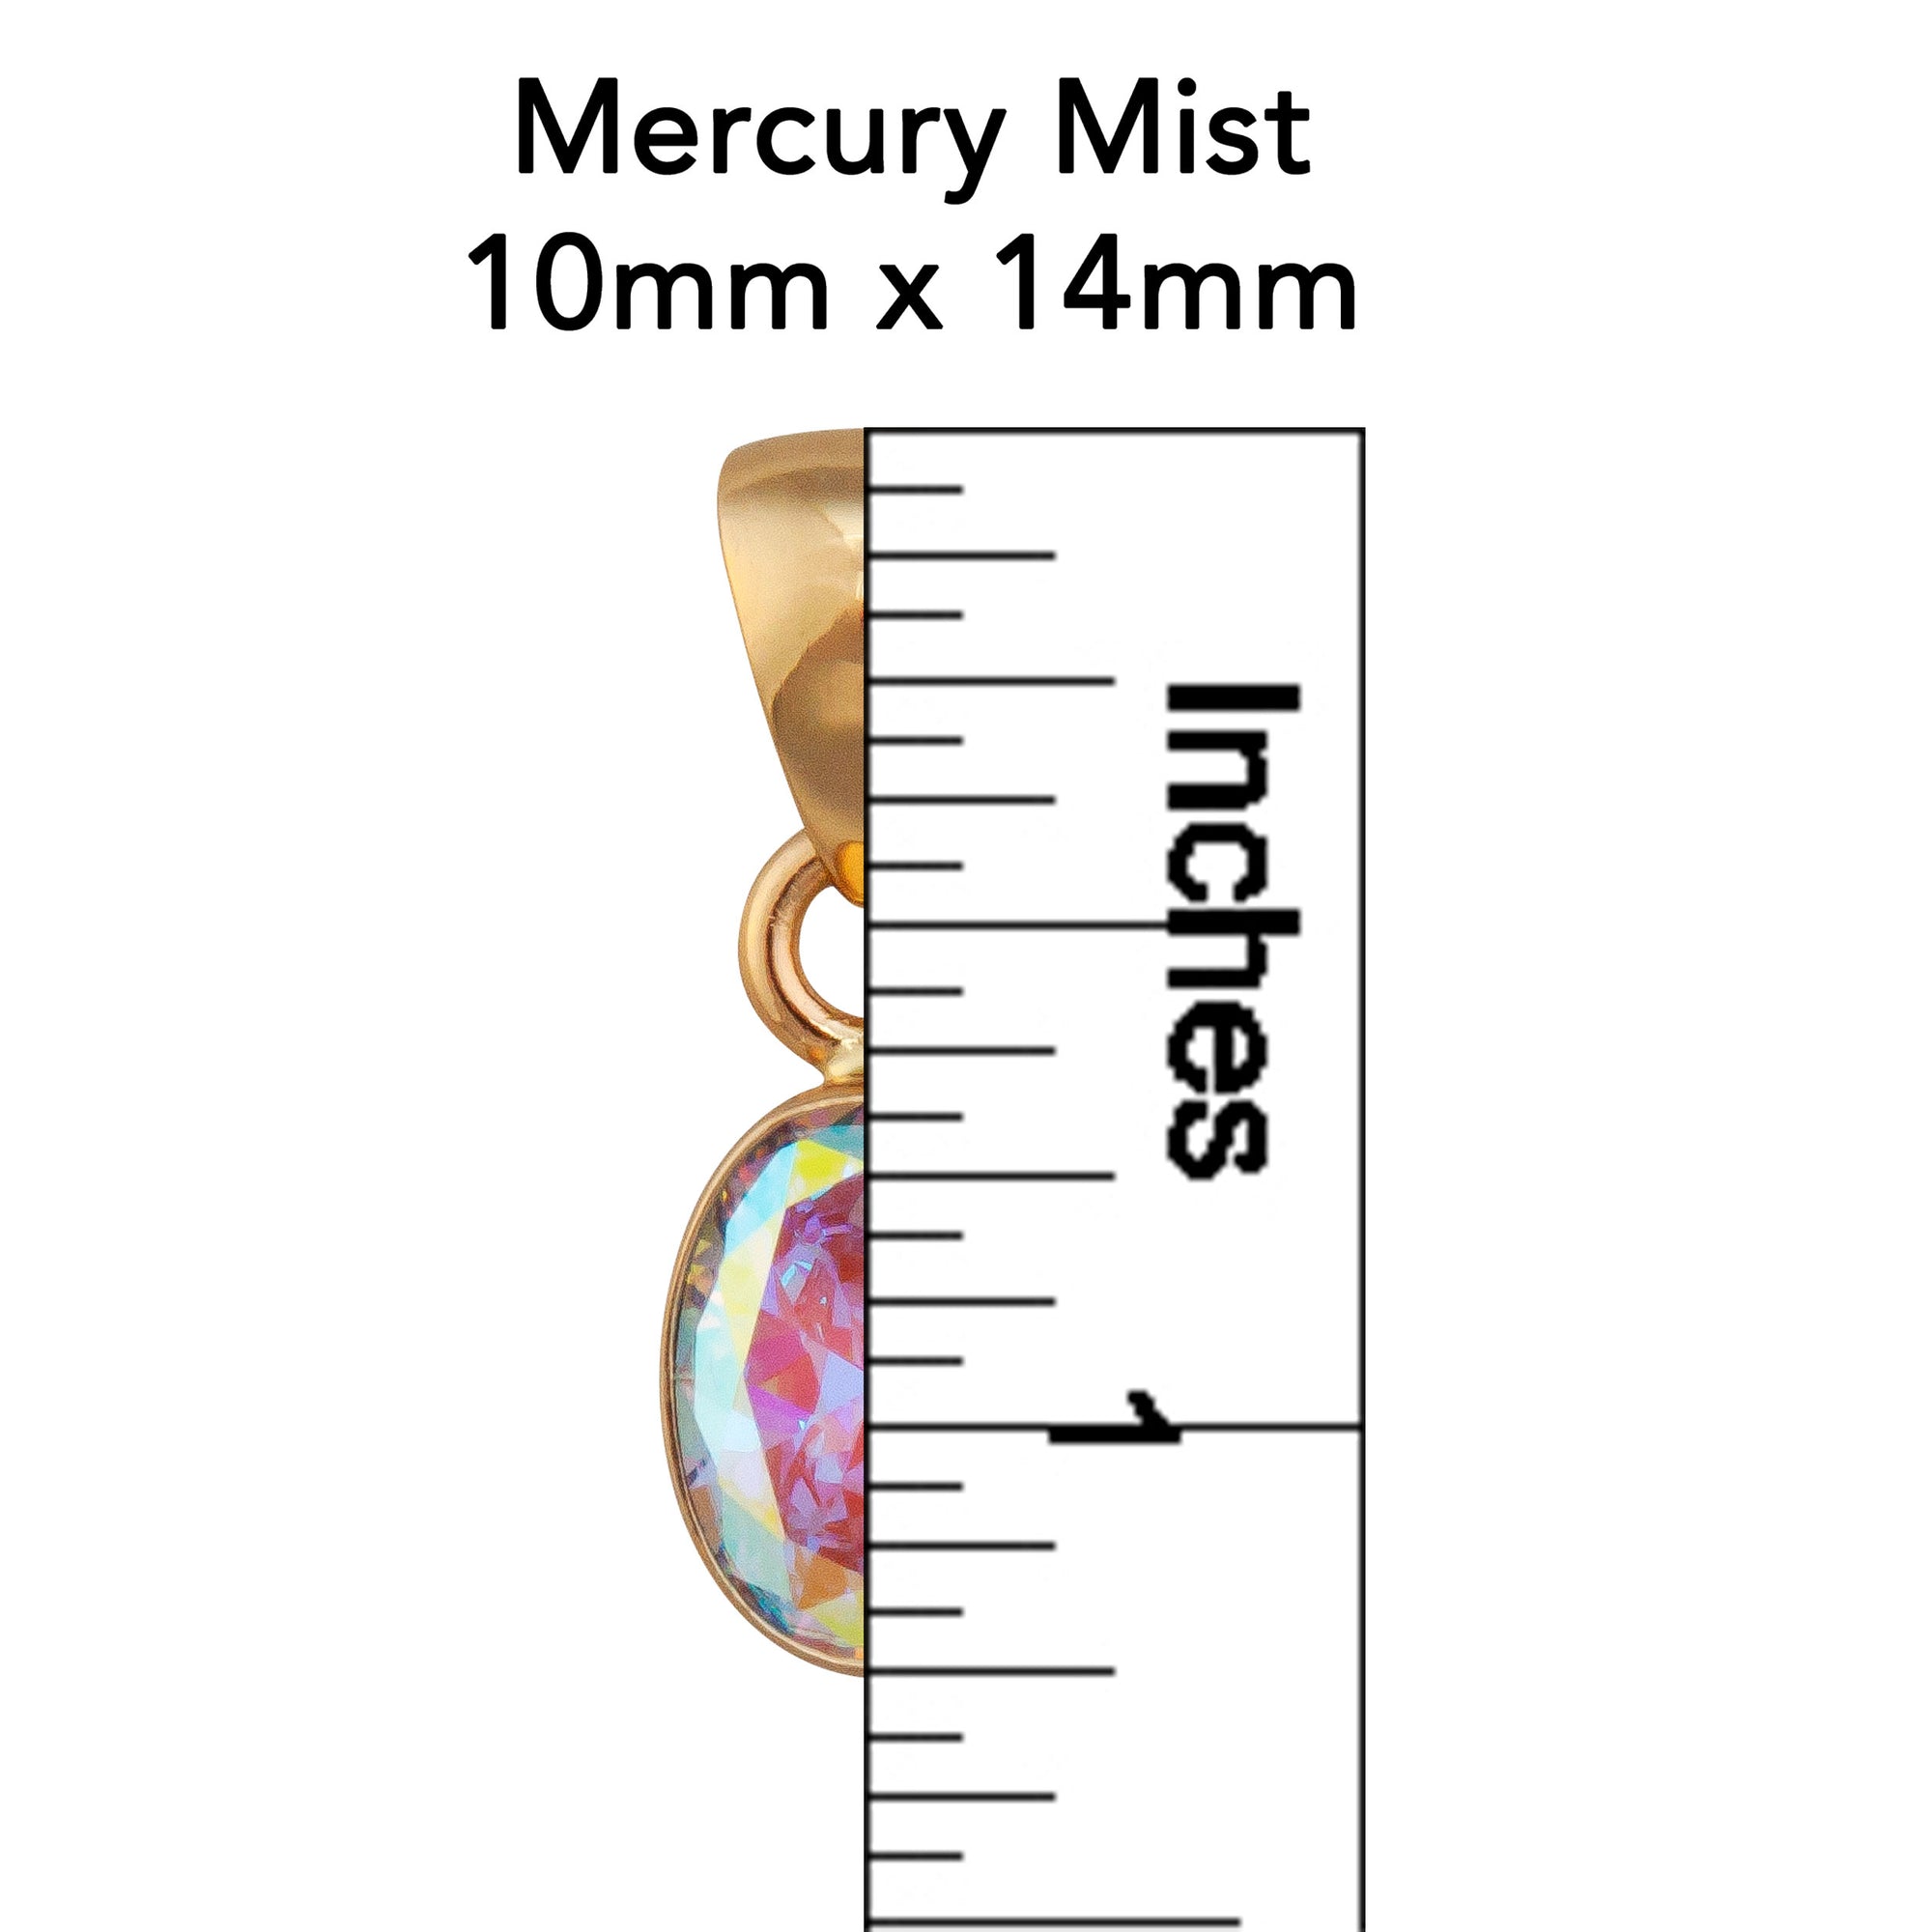 Alchemia Mercury Mist Oval Pendant | Charles Albert Jewelry